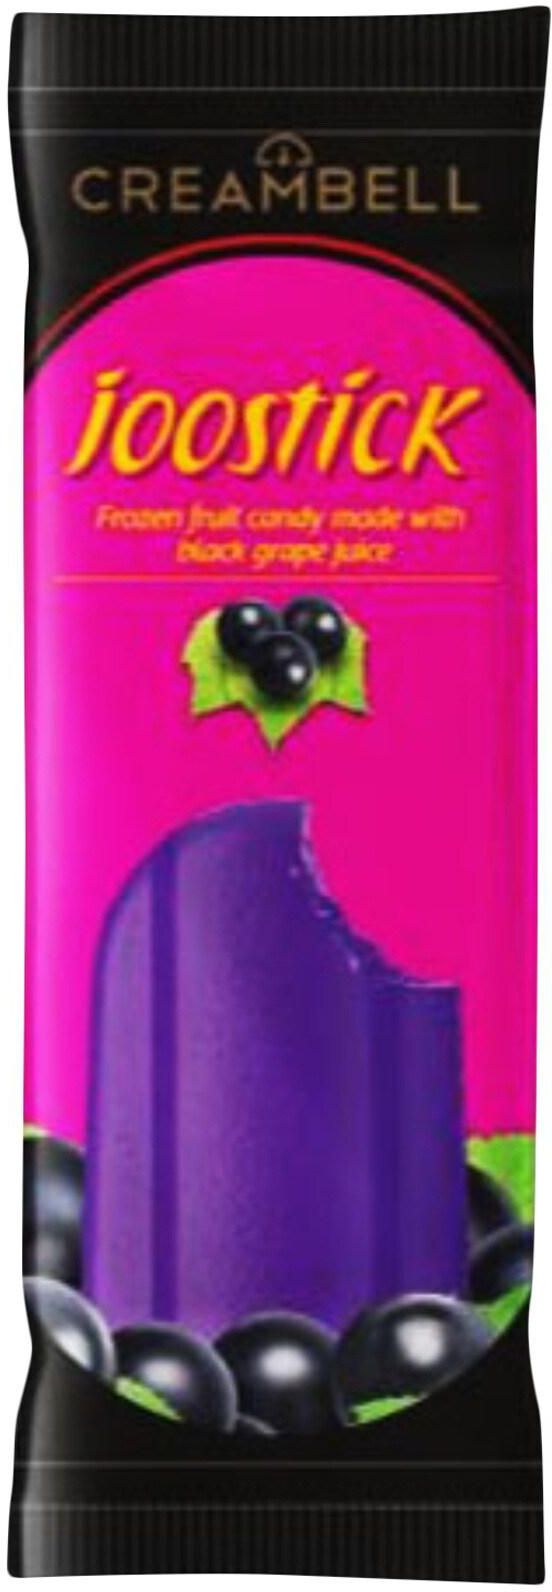 Creambell Joostick Grape Ice Cream 65ml